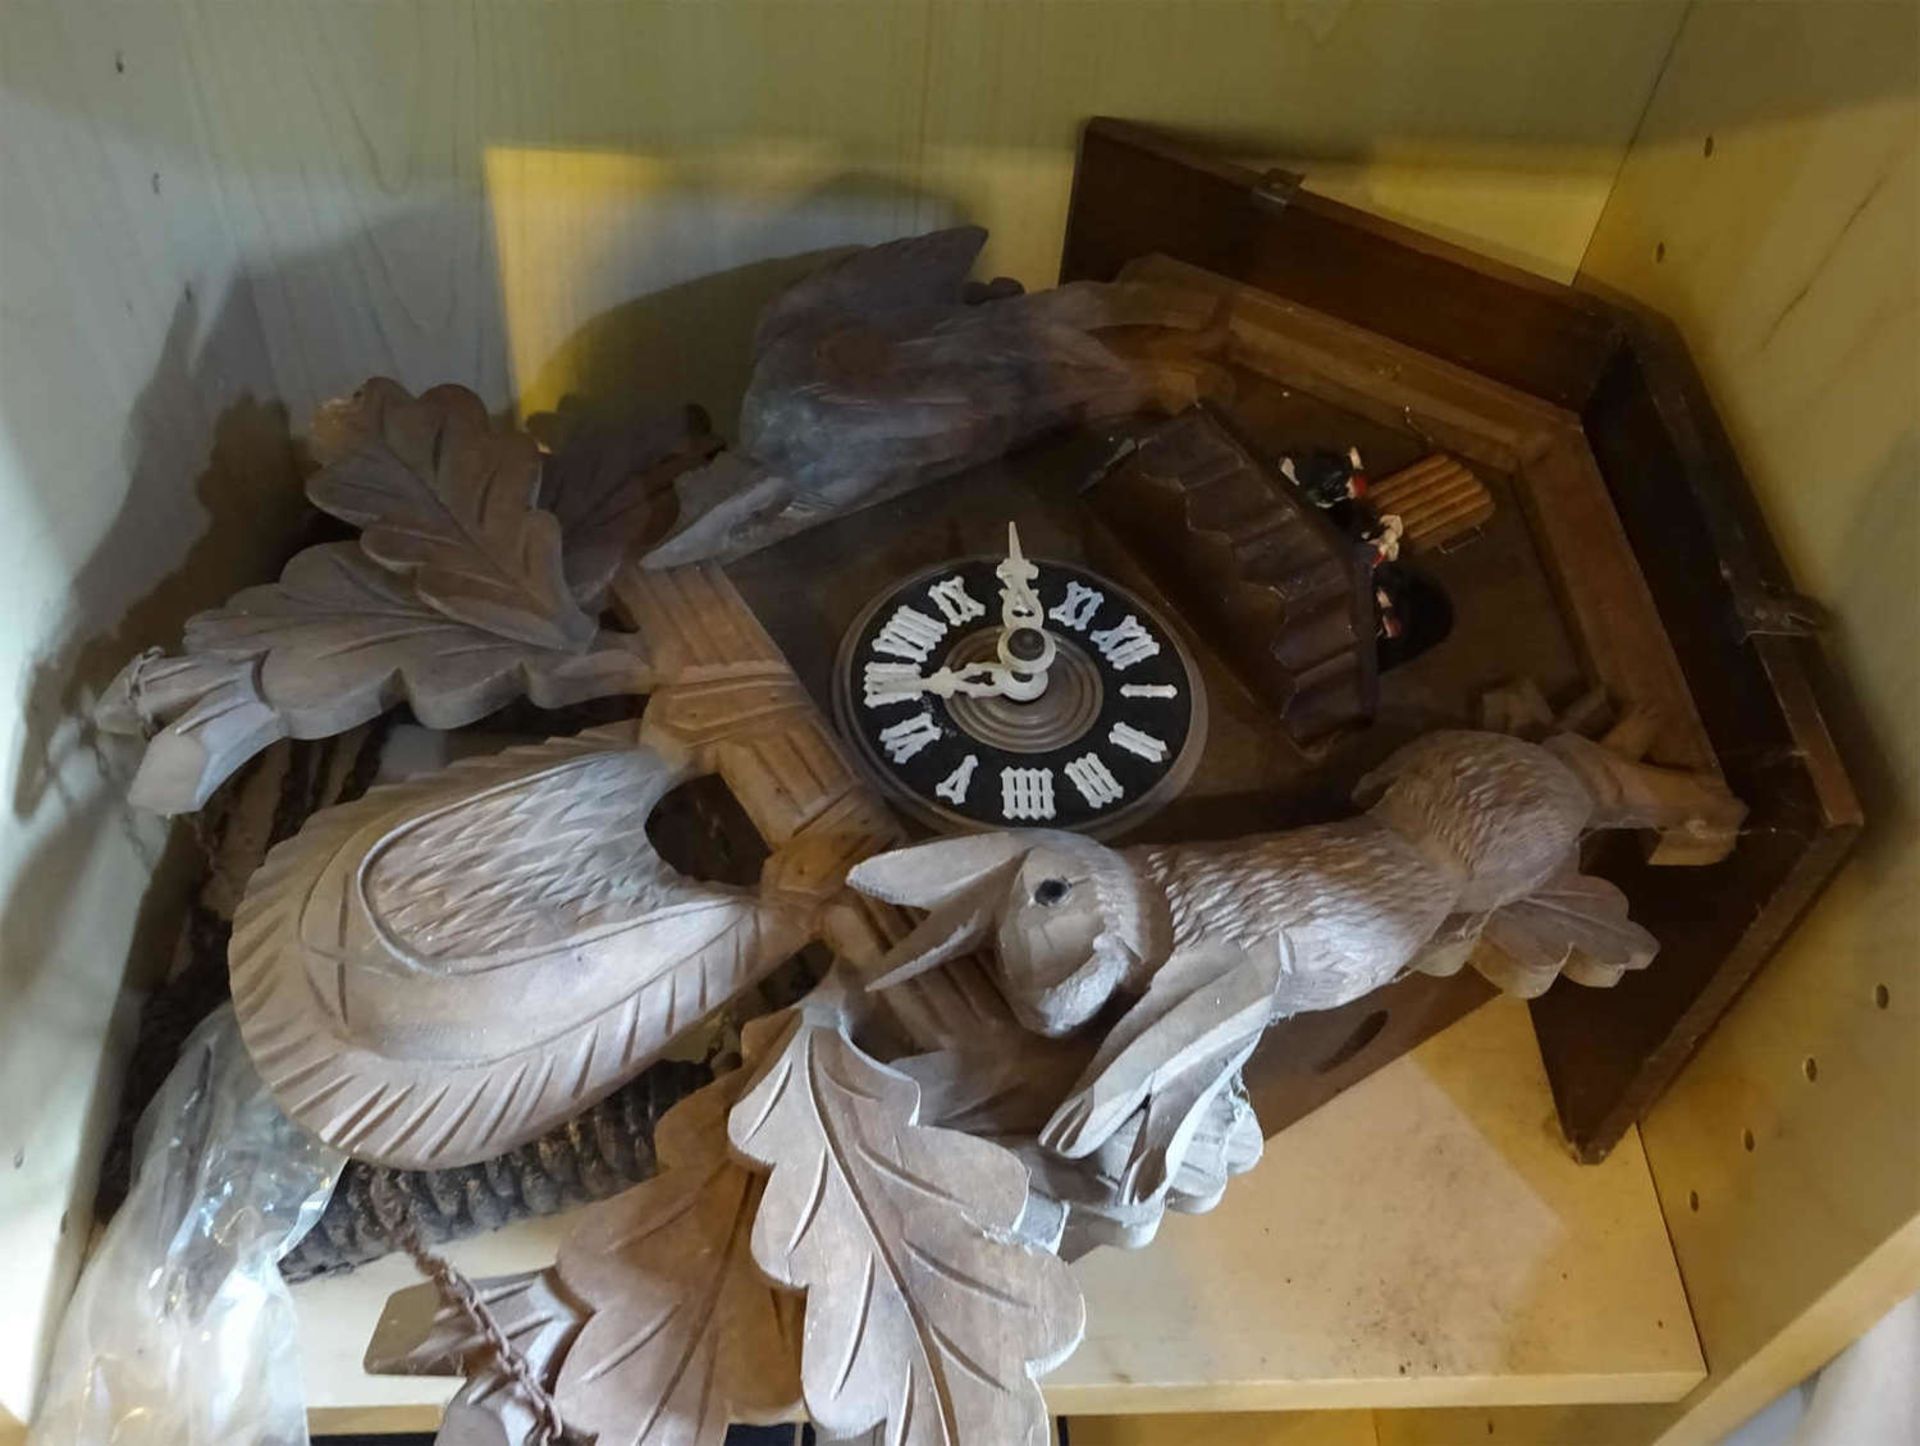 1 larger older wooden carved cuckoo clock with Regula-Werk, to prepare.